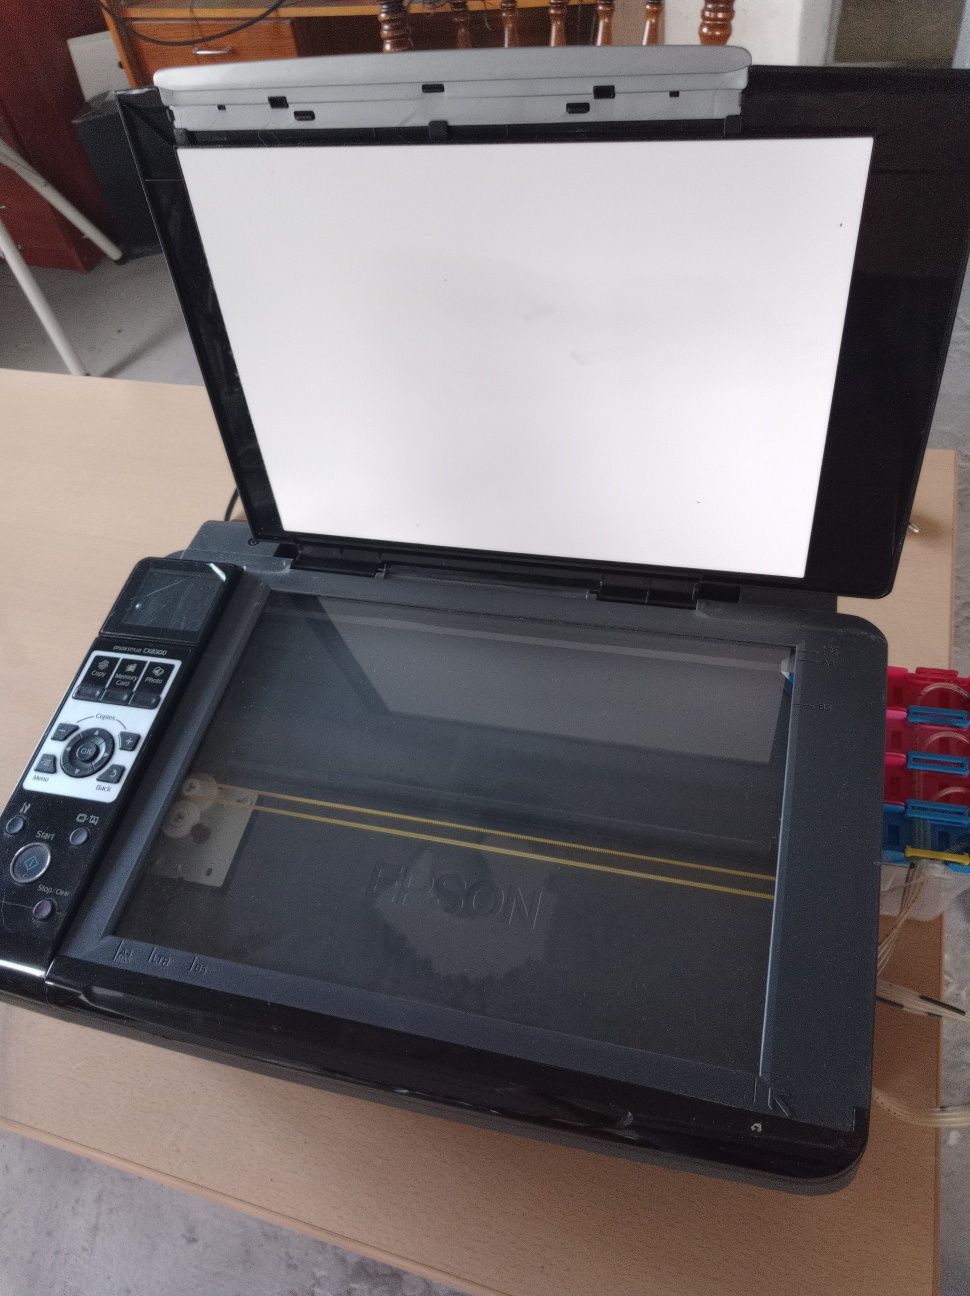 Принтер ксерокс сканер Epson